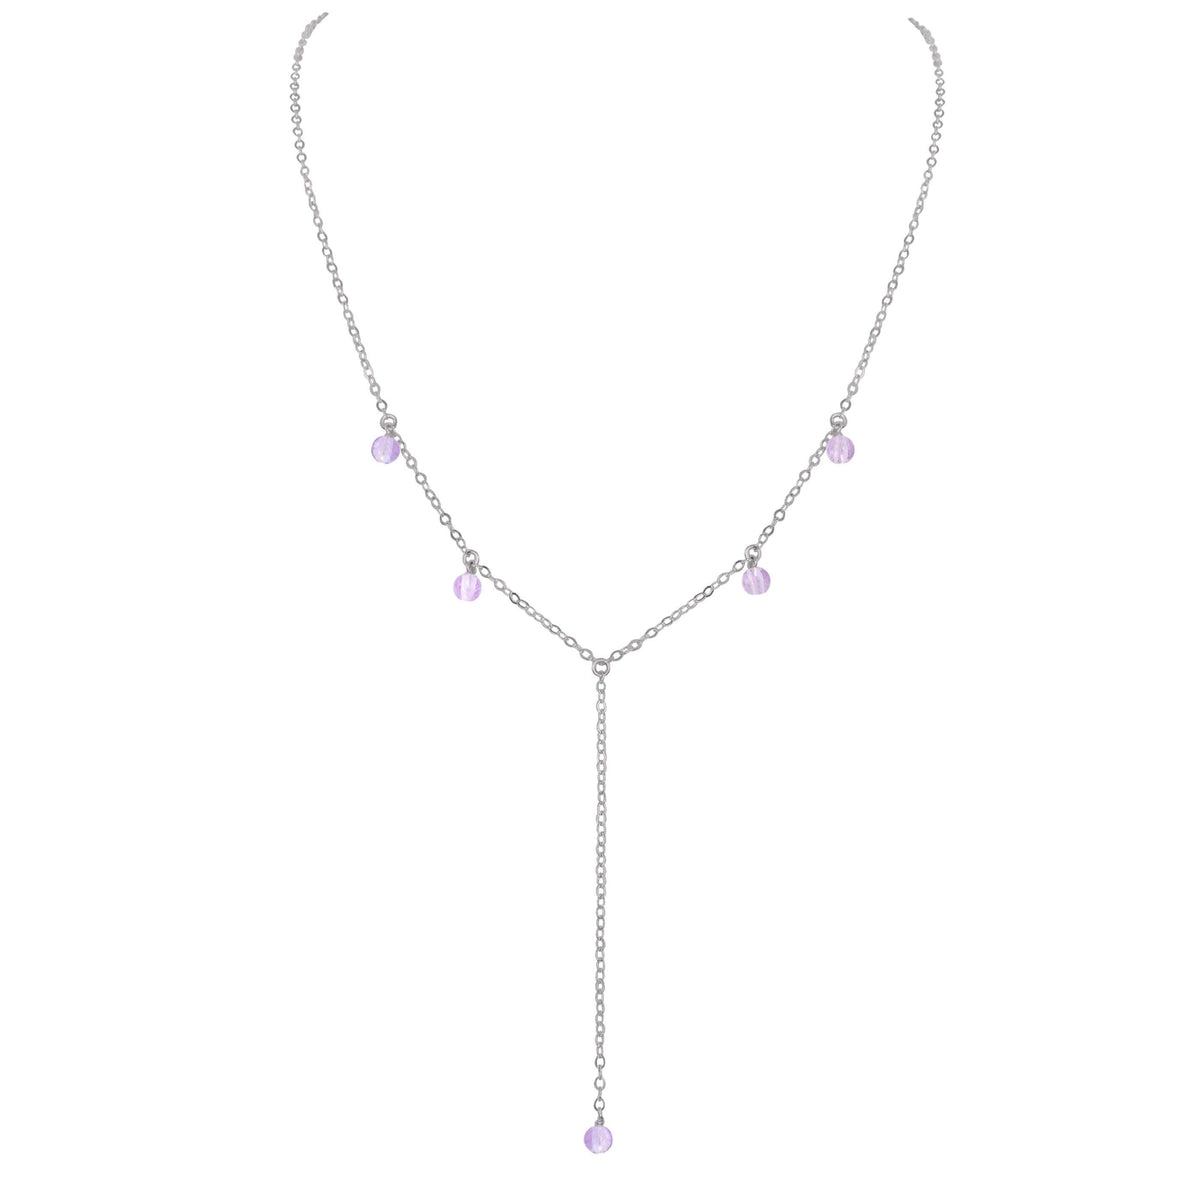 Boho Y Necklace - Lavender Amethyst - Stainless Steel - Luna Tide Handmade Jewellery